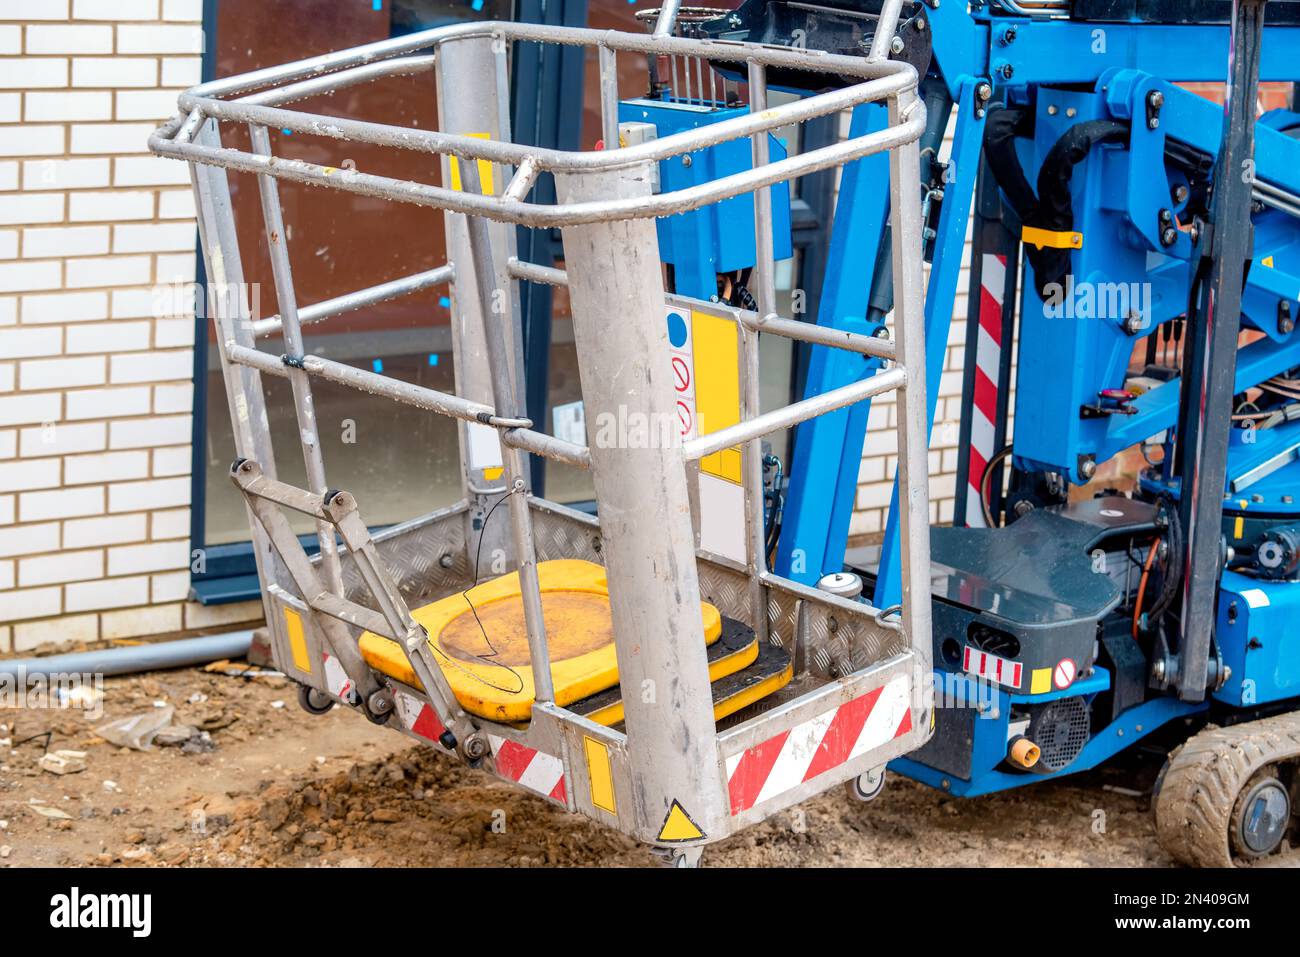 Blue mobile crawler elevating platform on building site Stock Photo